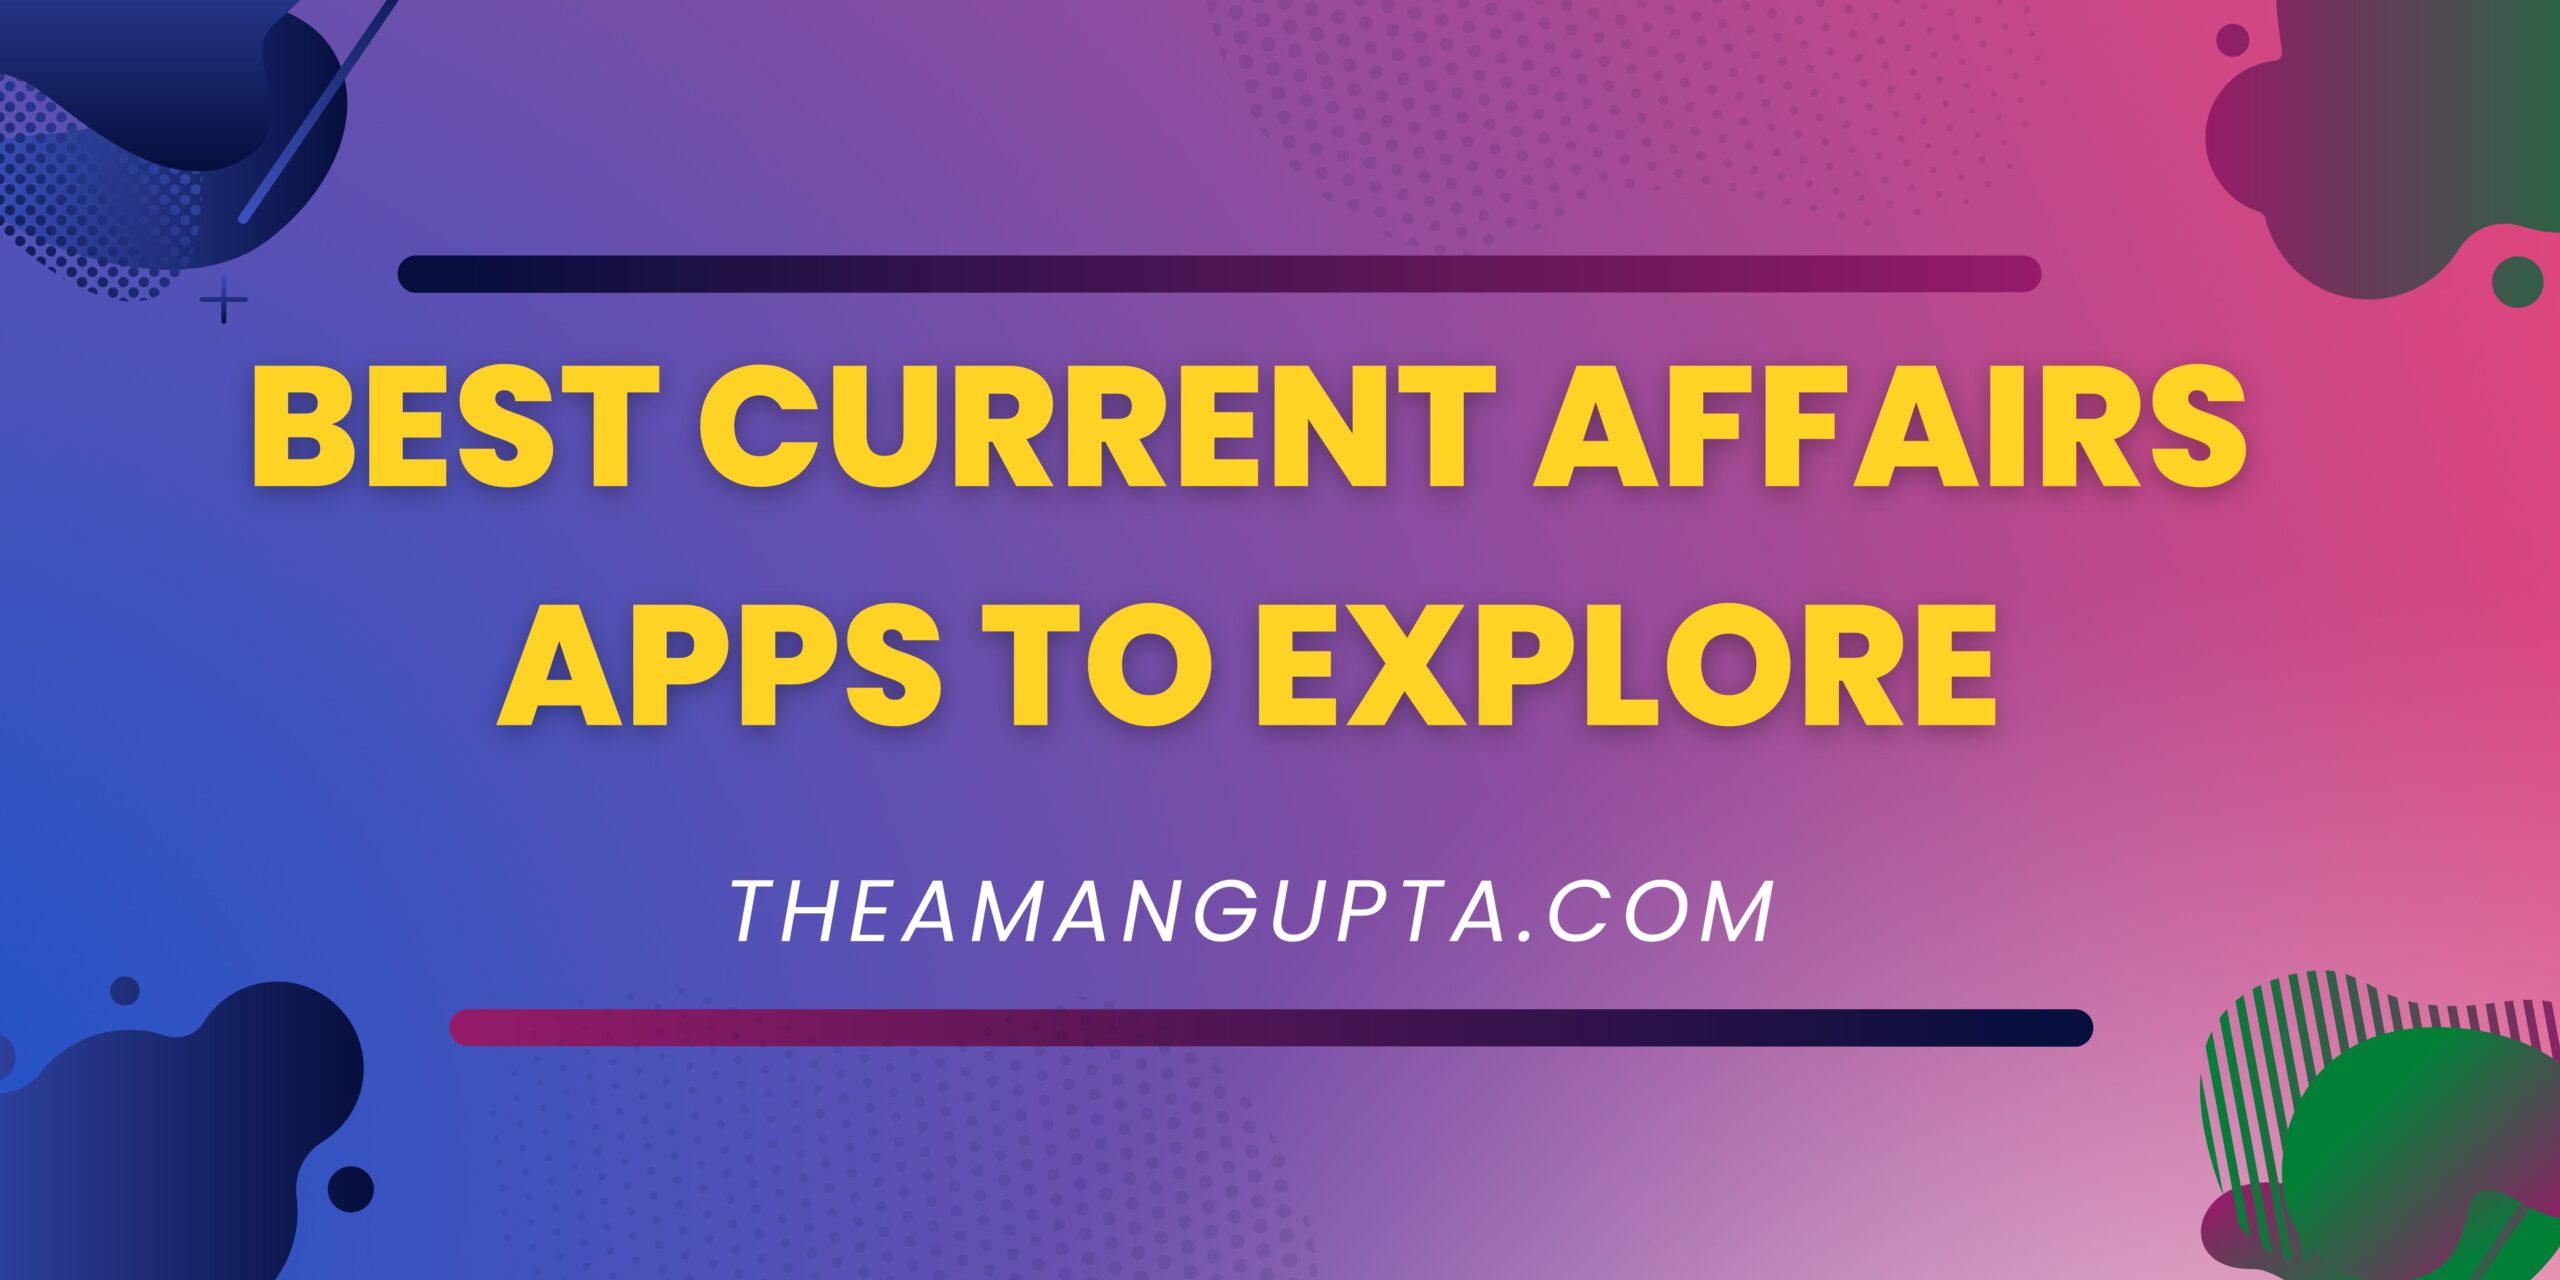 Best Current Affairs Apps To Explore|Current Affairs|Tannu Rani|Theamangupta